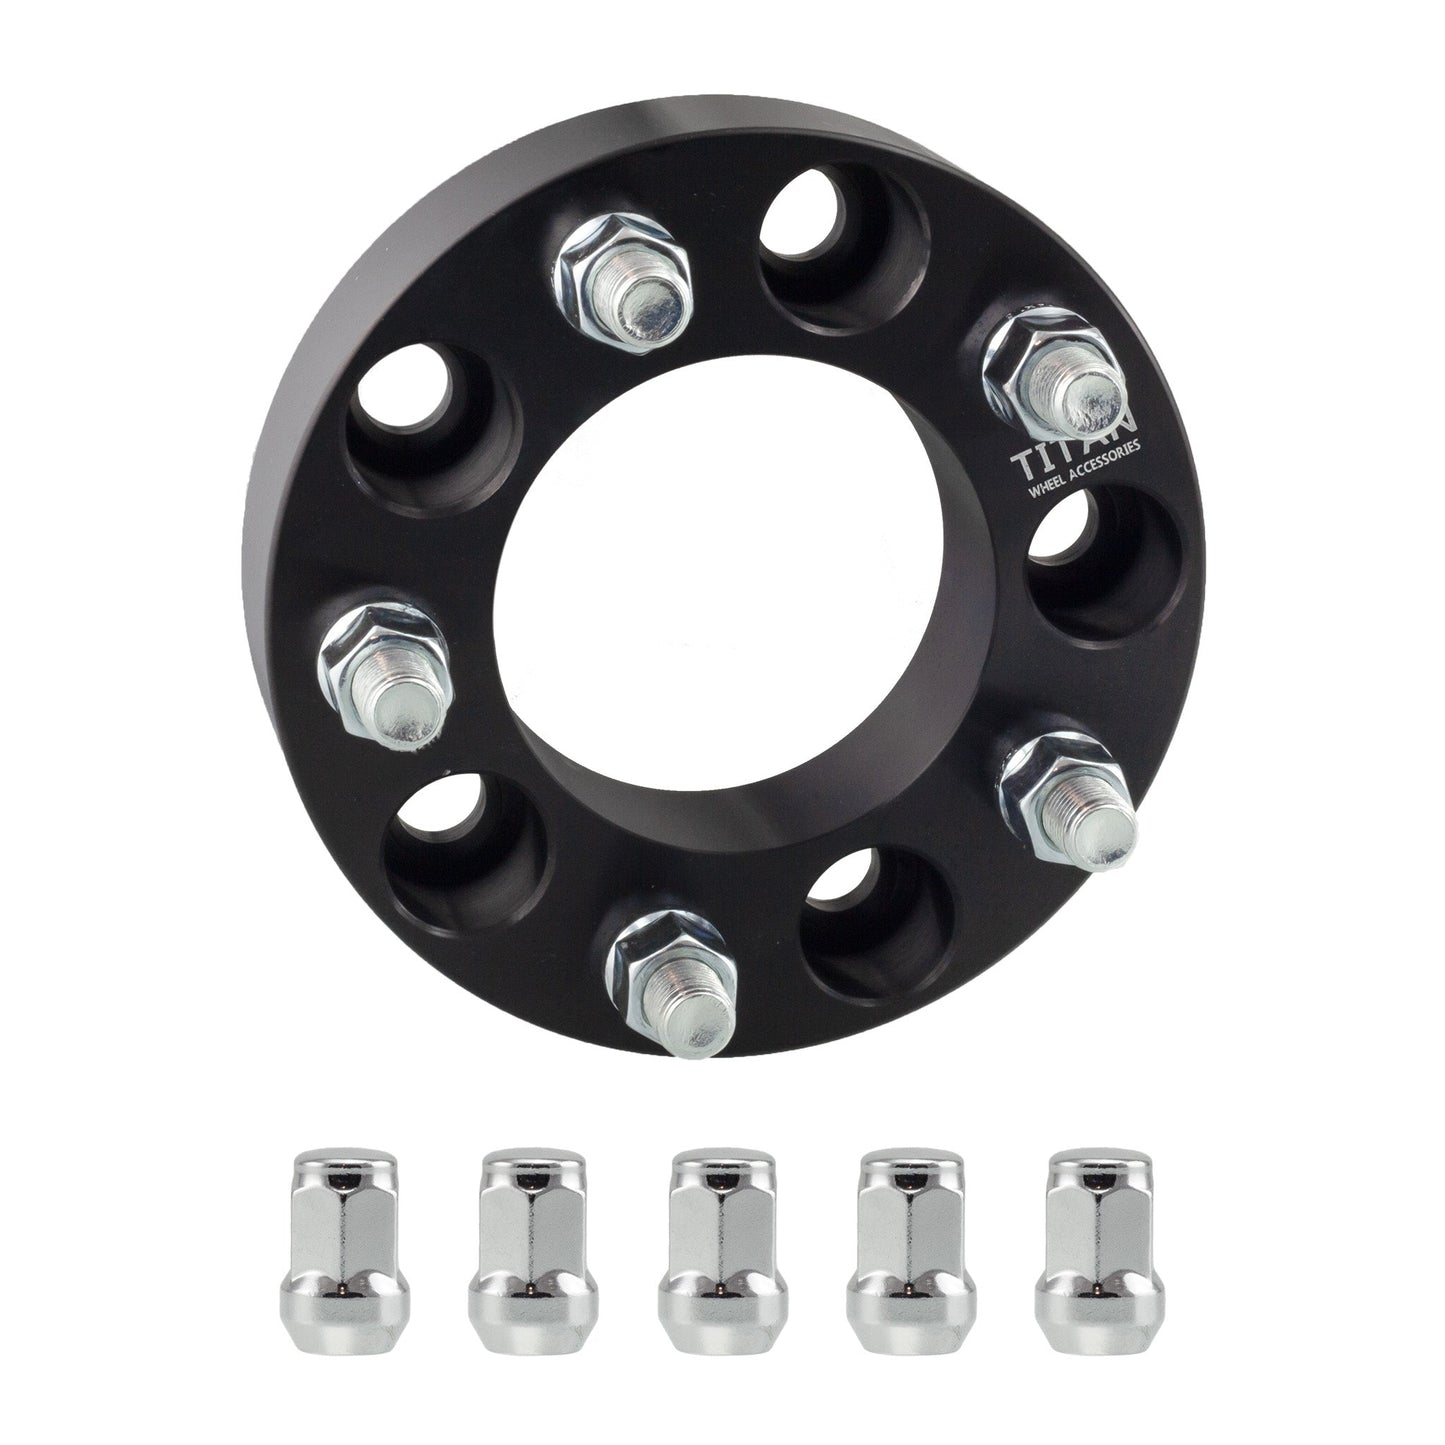 15mm Titan Wheel Spacers for Mazda 3 5 6 RX Mitsubishi Eclipse | 5x114.3 (5x4.5) | 67.1 Hubcentric |12x1.5 Studs | Titan Wheel Accessories